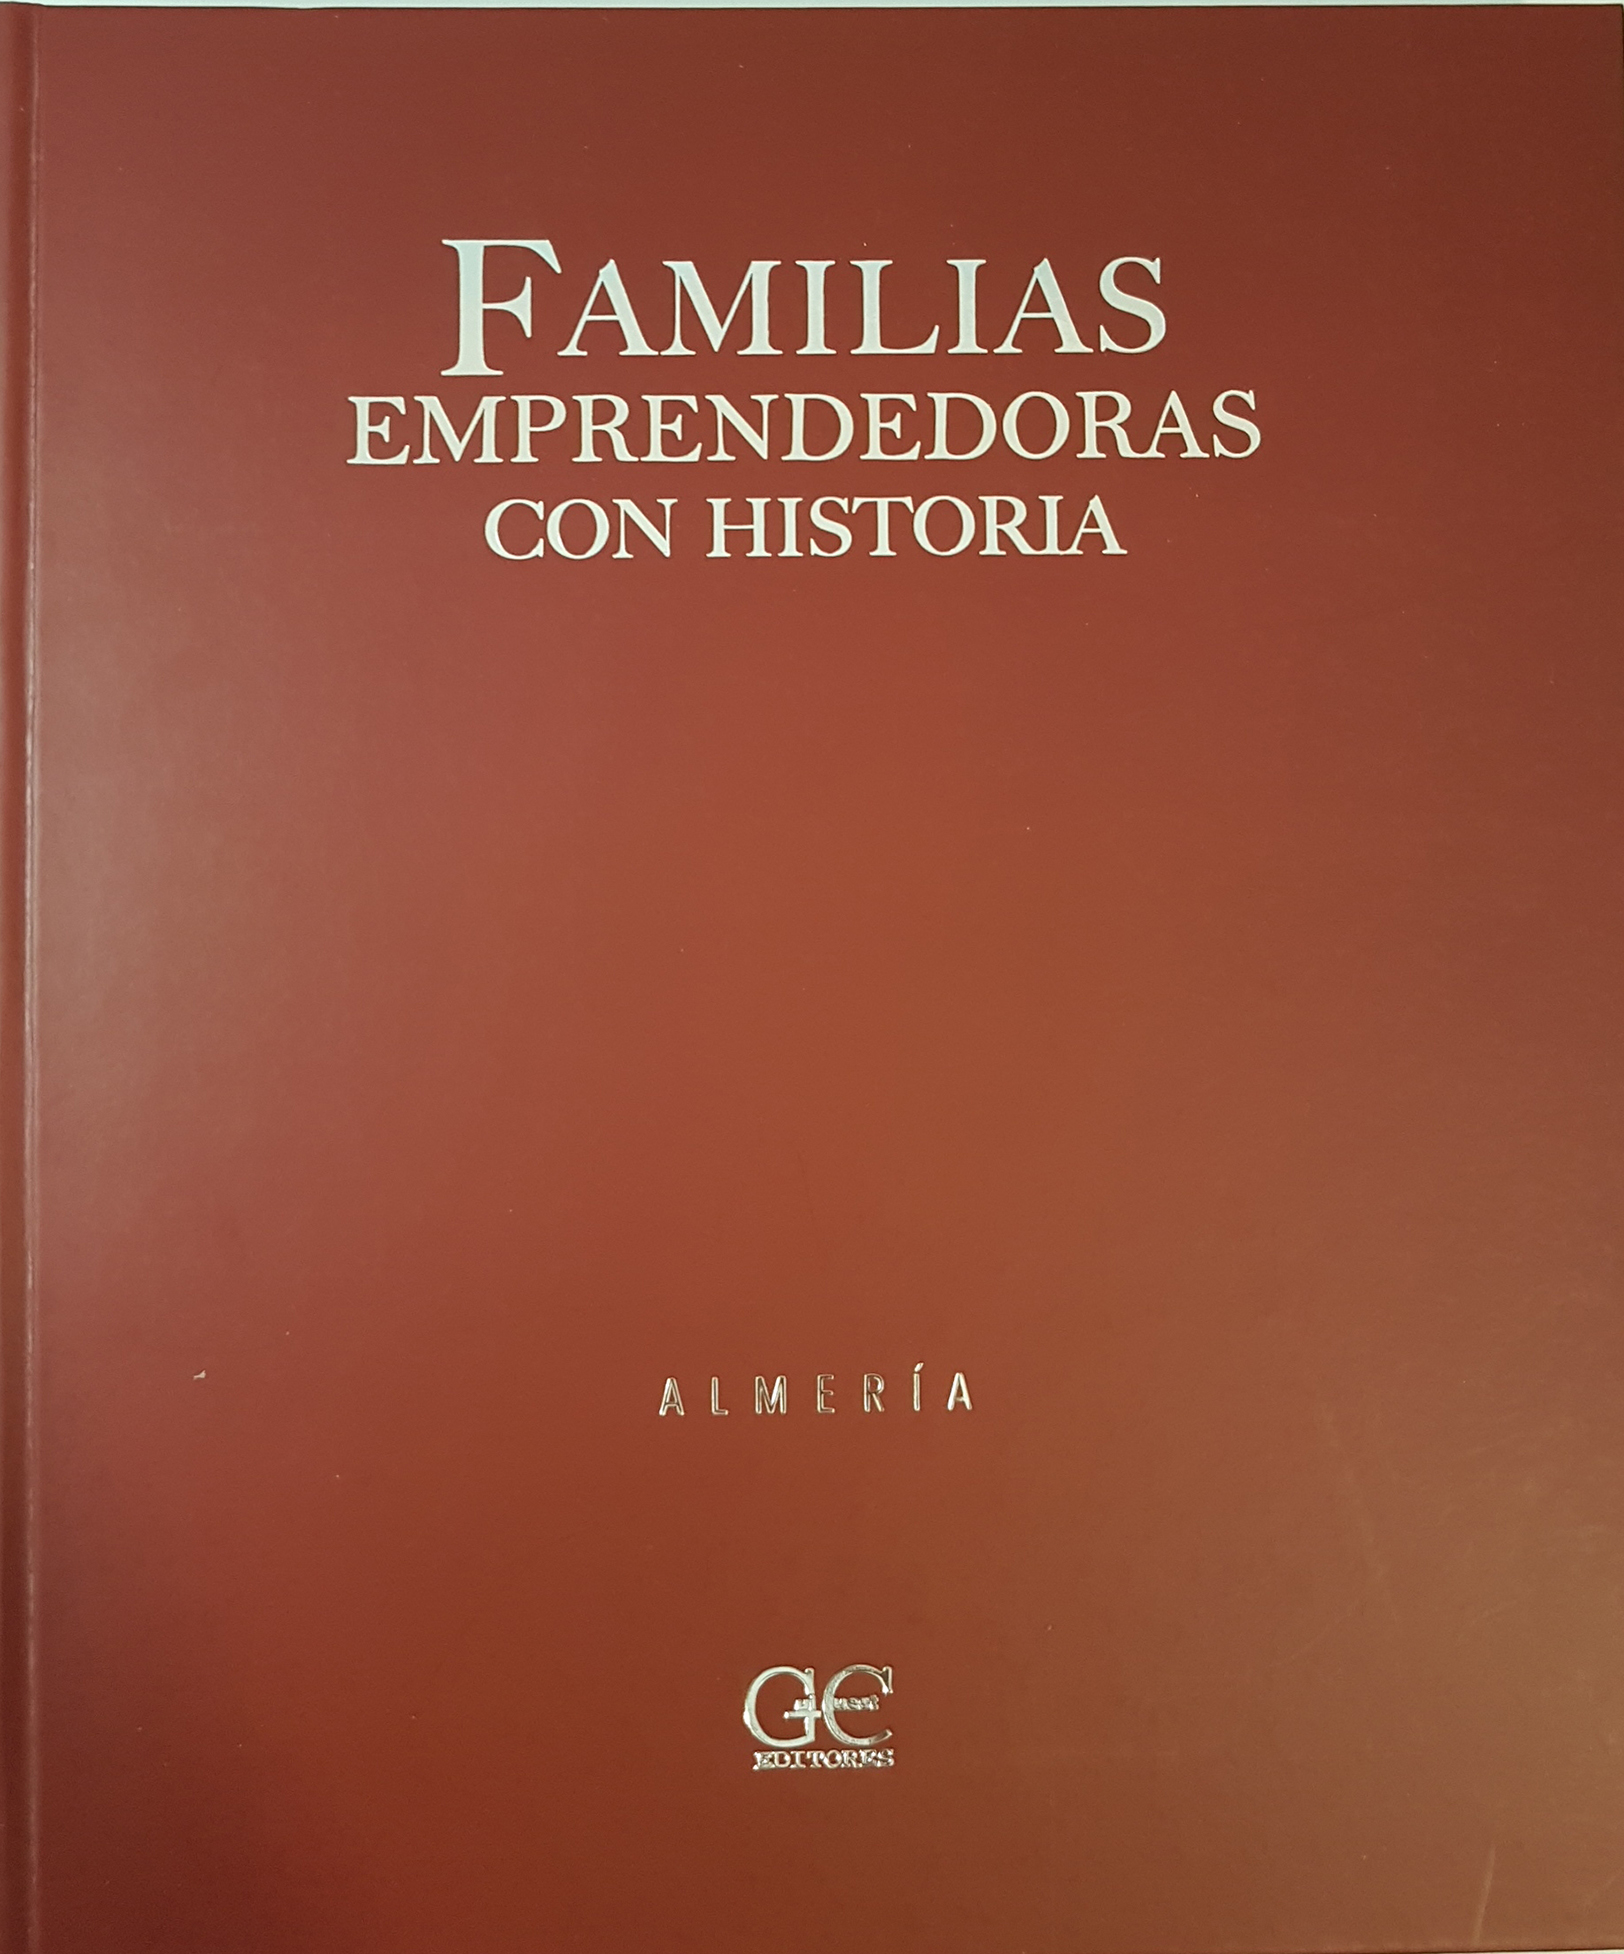 Familias Emprendedoras con Historia - Almería (2018)